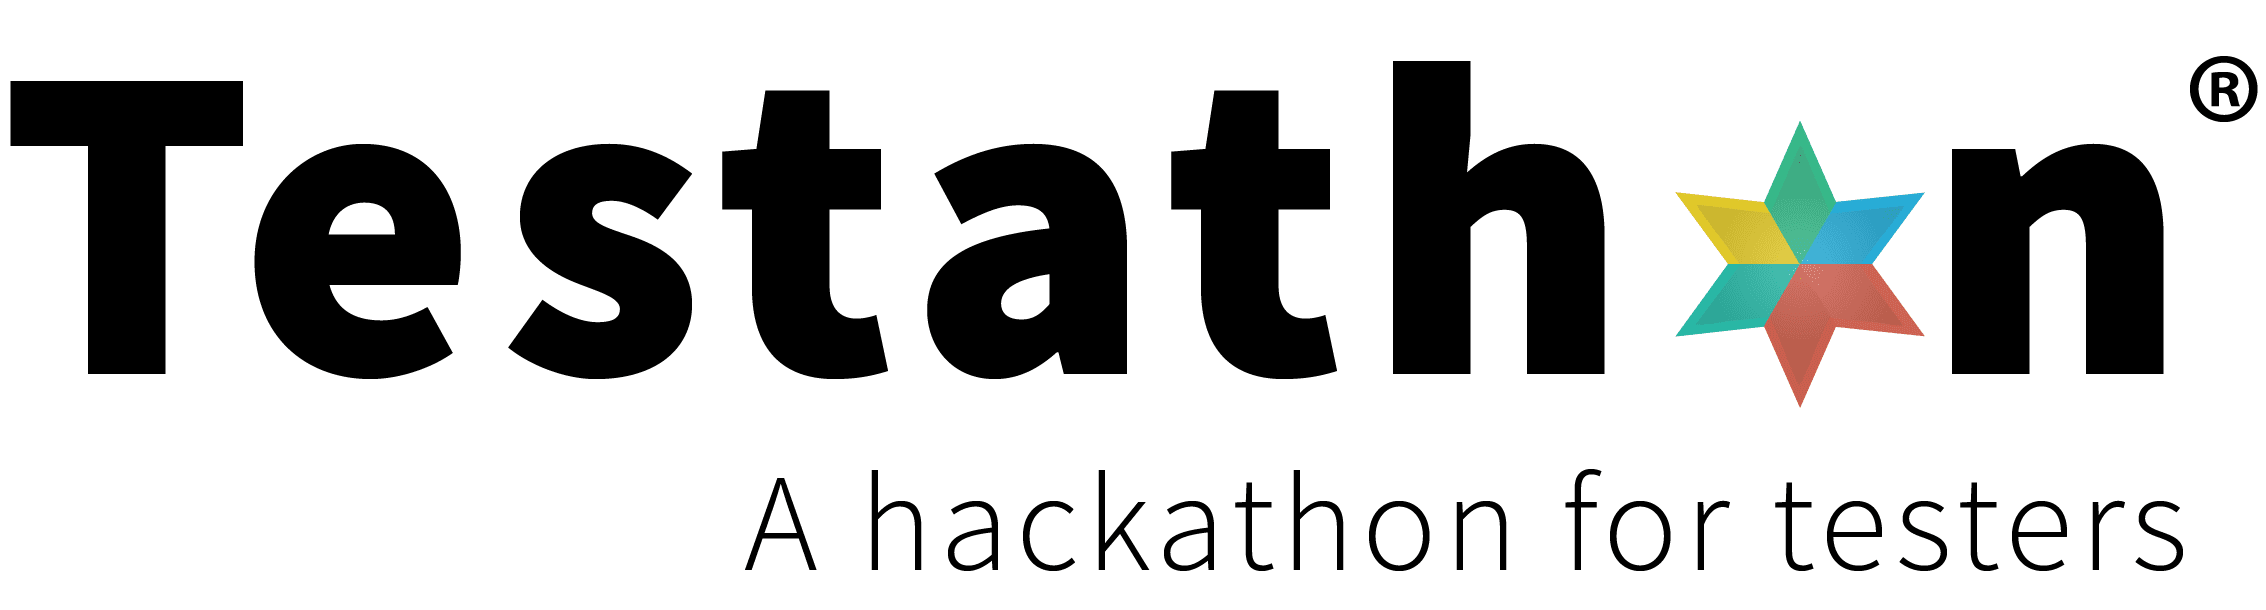 Noo not Hackathon but Testhaton